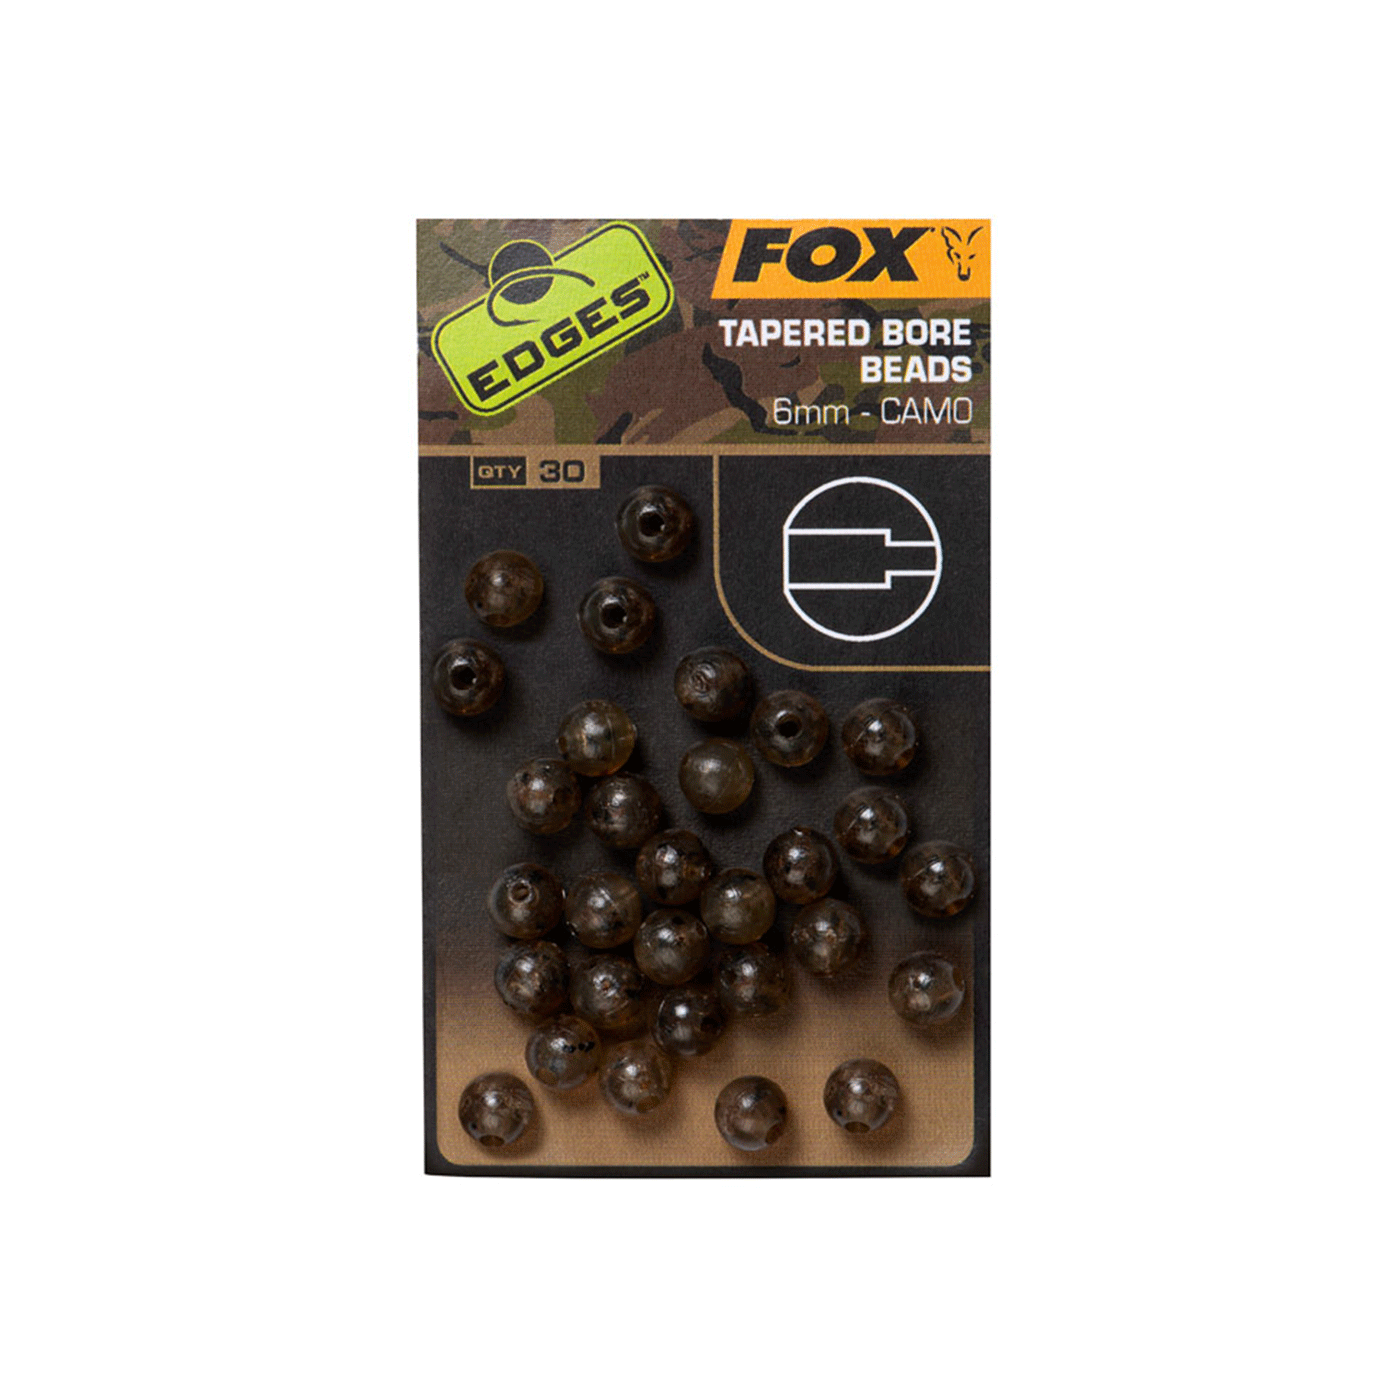 FOX - EDGES™ TAPERED BORE BEADS 6mm - CAMO (30PCS)